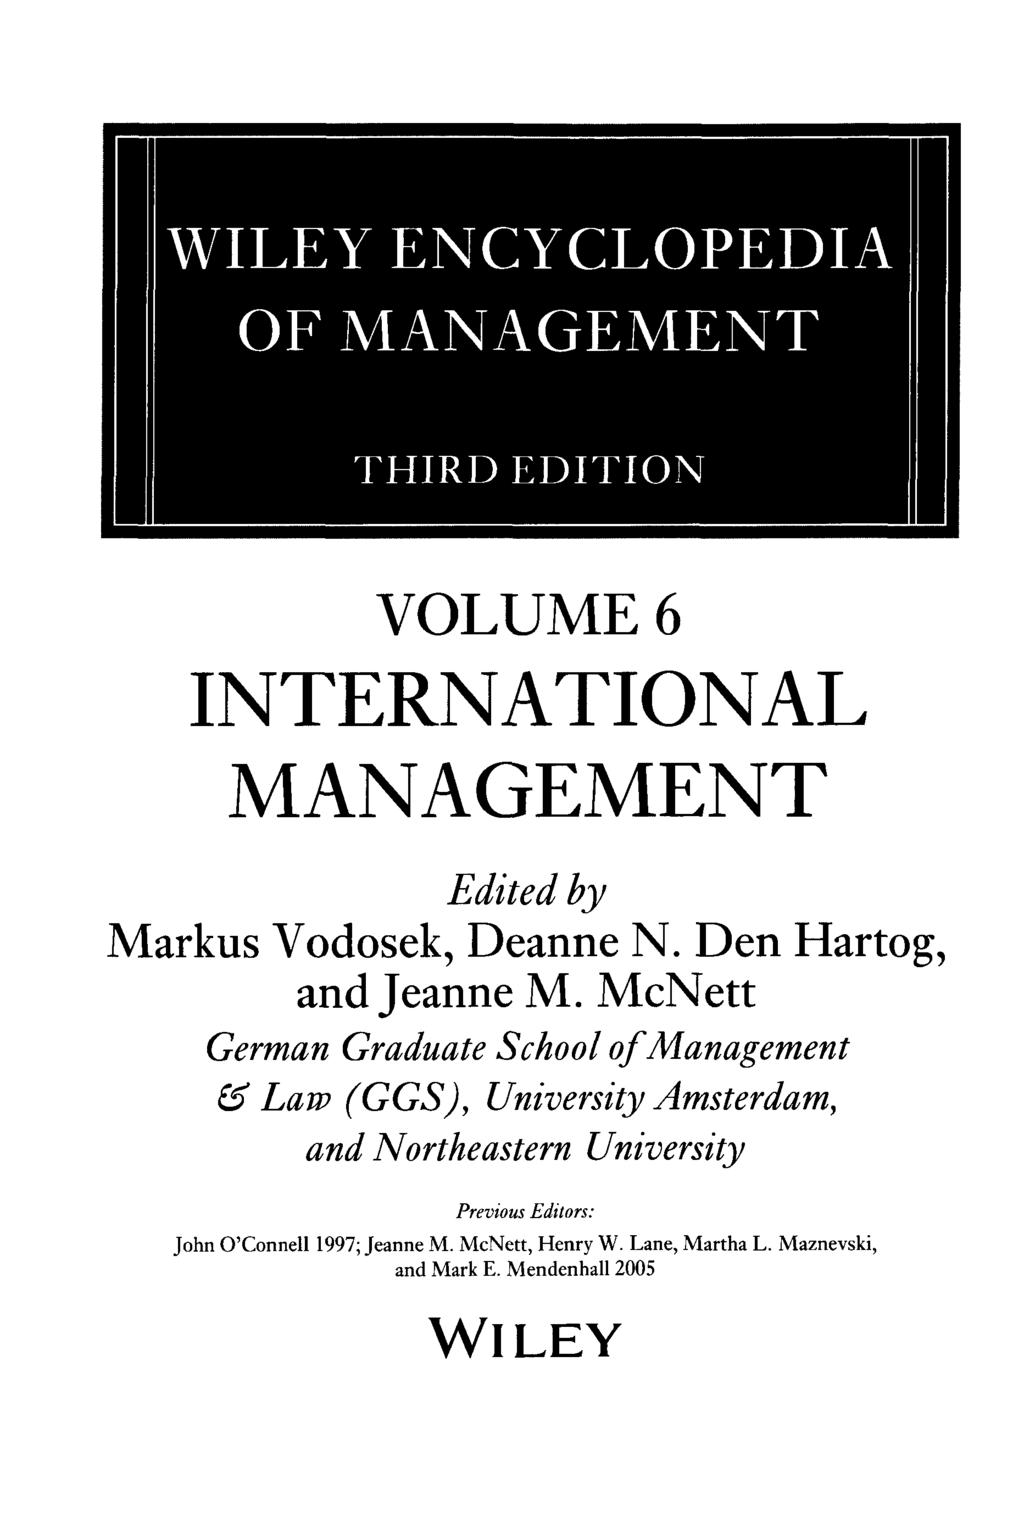 WILEY ENCYCLOPEDIA OF MANAGEMENT THIRD EDITION VOLUME 6 INTERNATIONAL MANAGEMENT Edited by Markus Vodosek, Deanne N. Den Hartog, and Jeanne M.